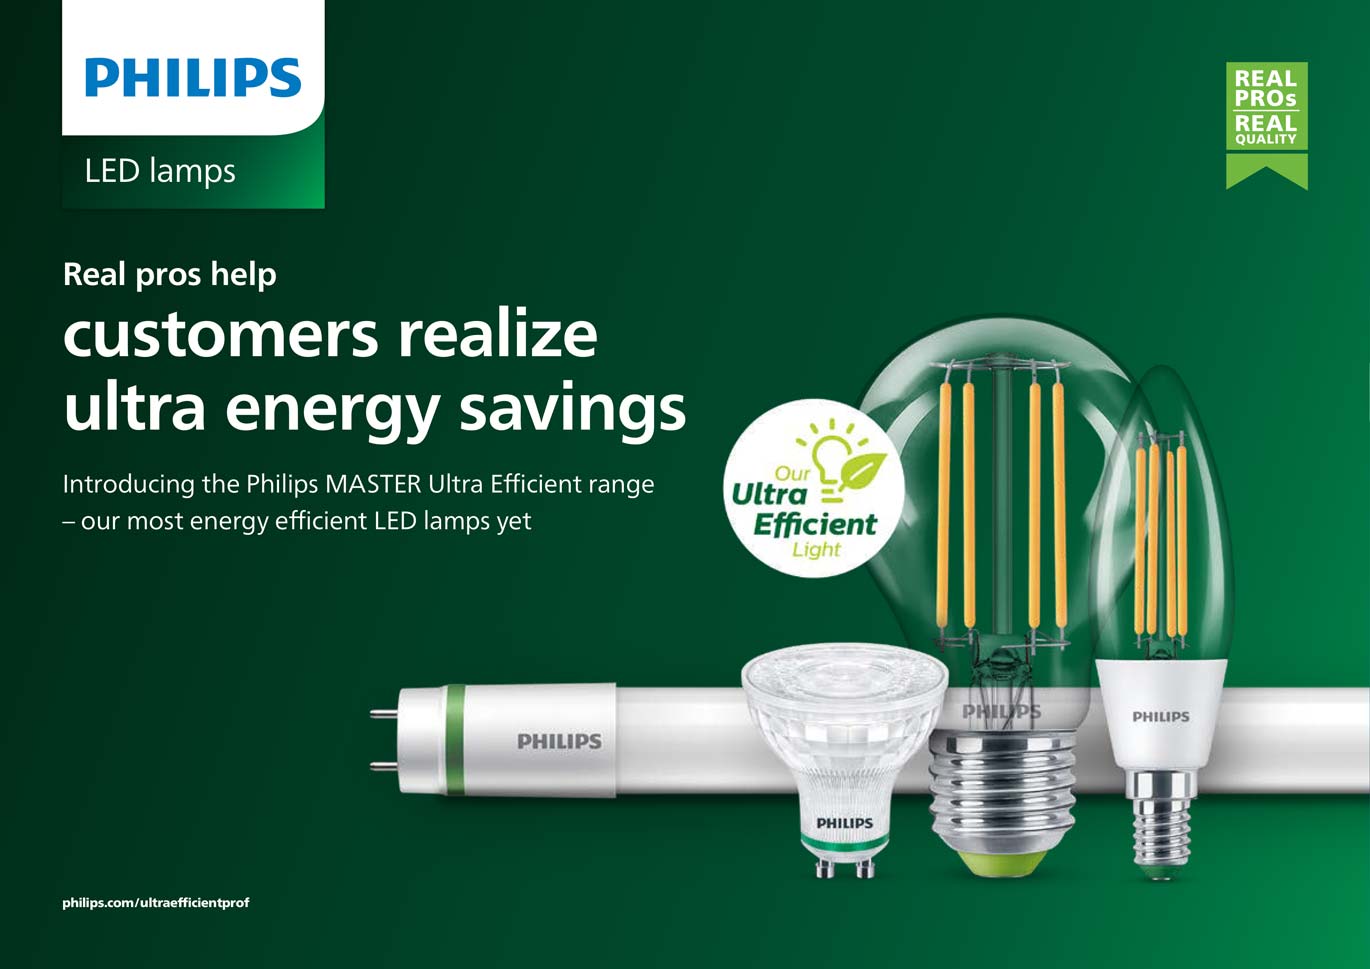 Philips LED efficency